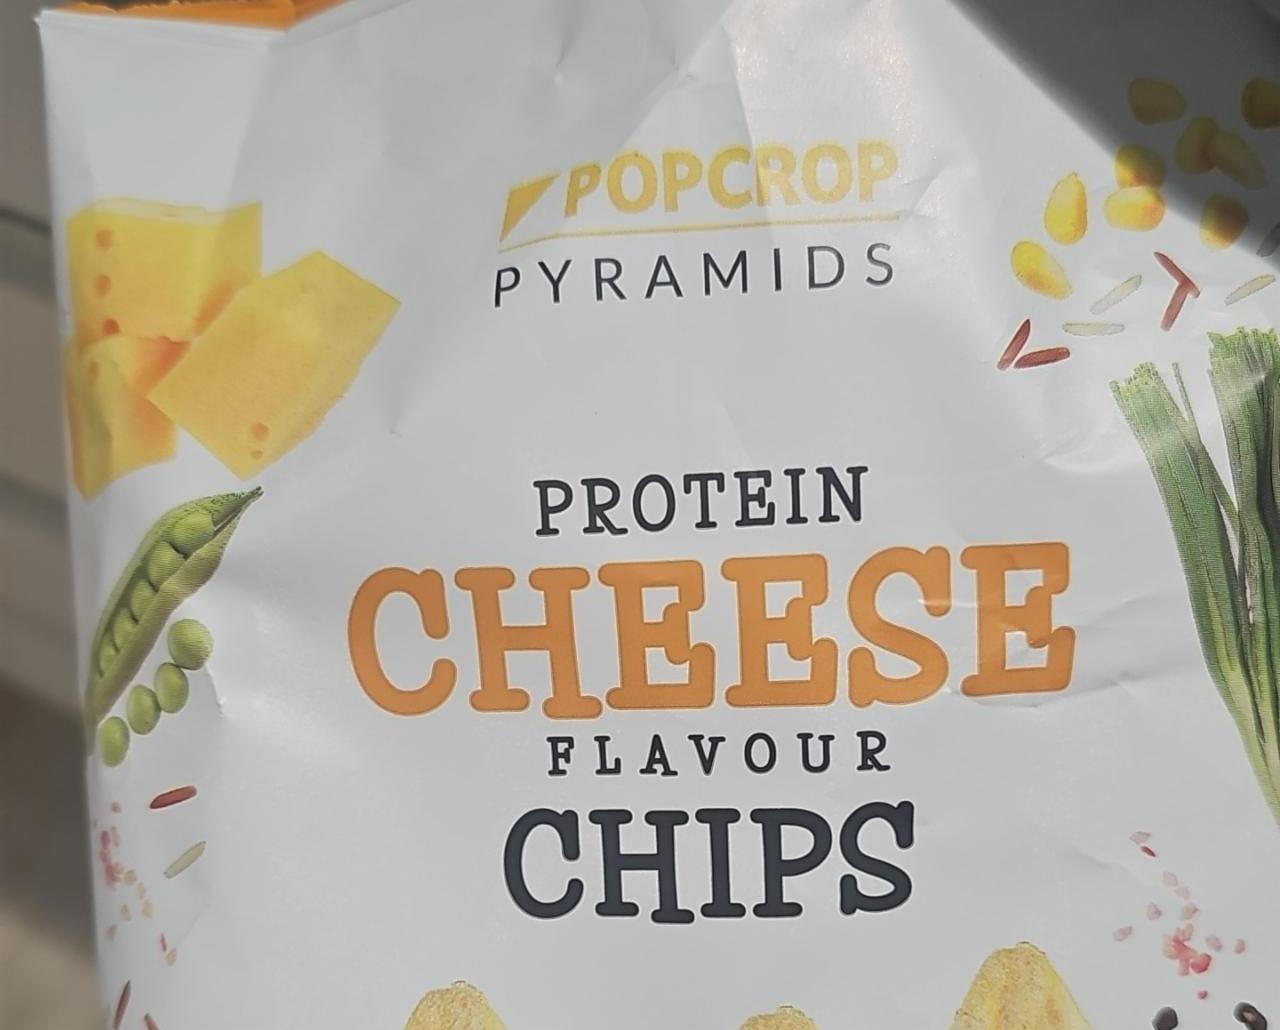 Fotografie - Protein cheese flavour chips Popcrop Pyramids